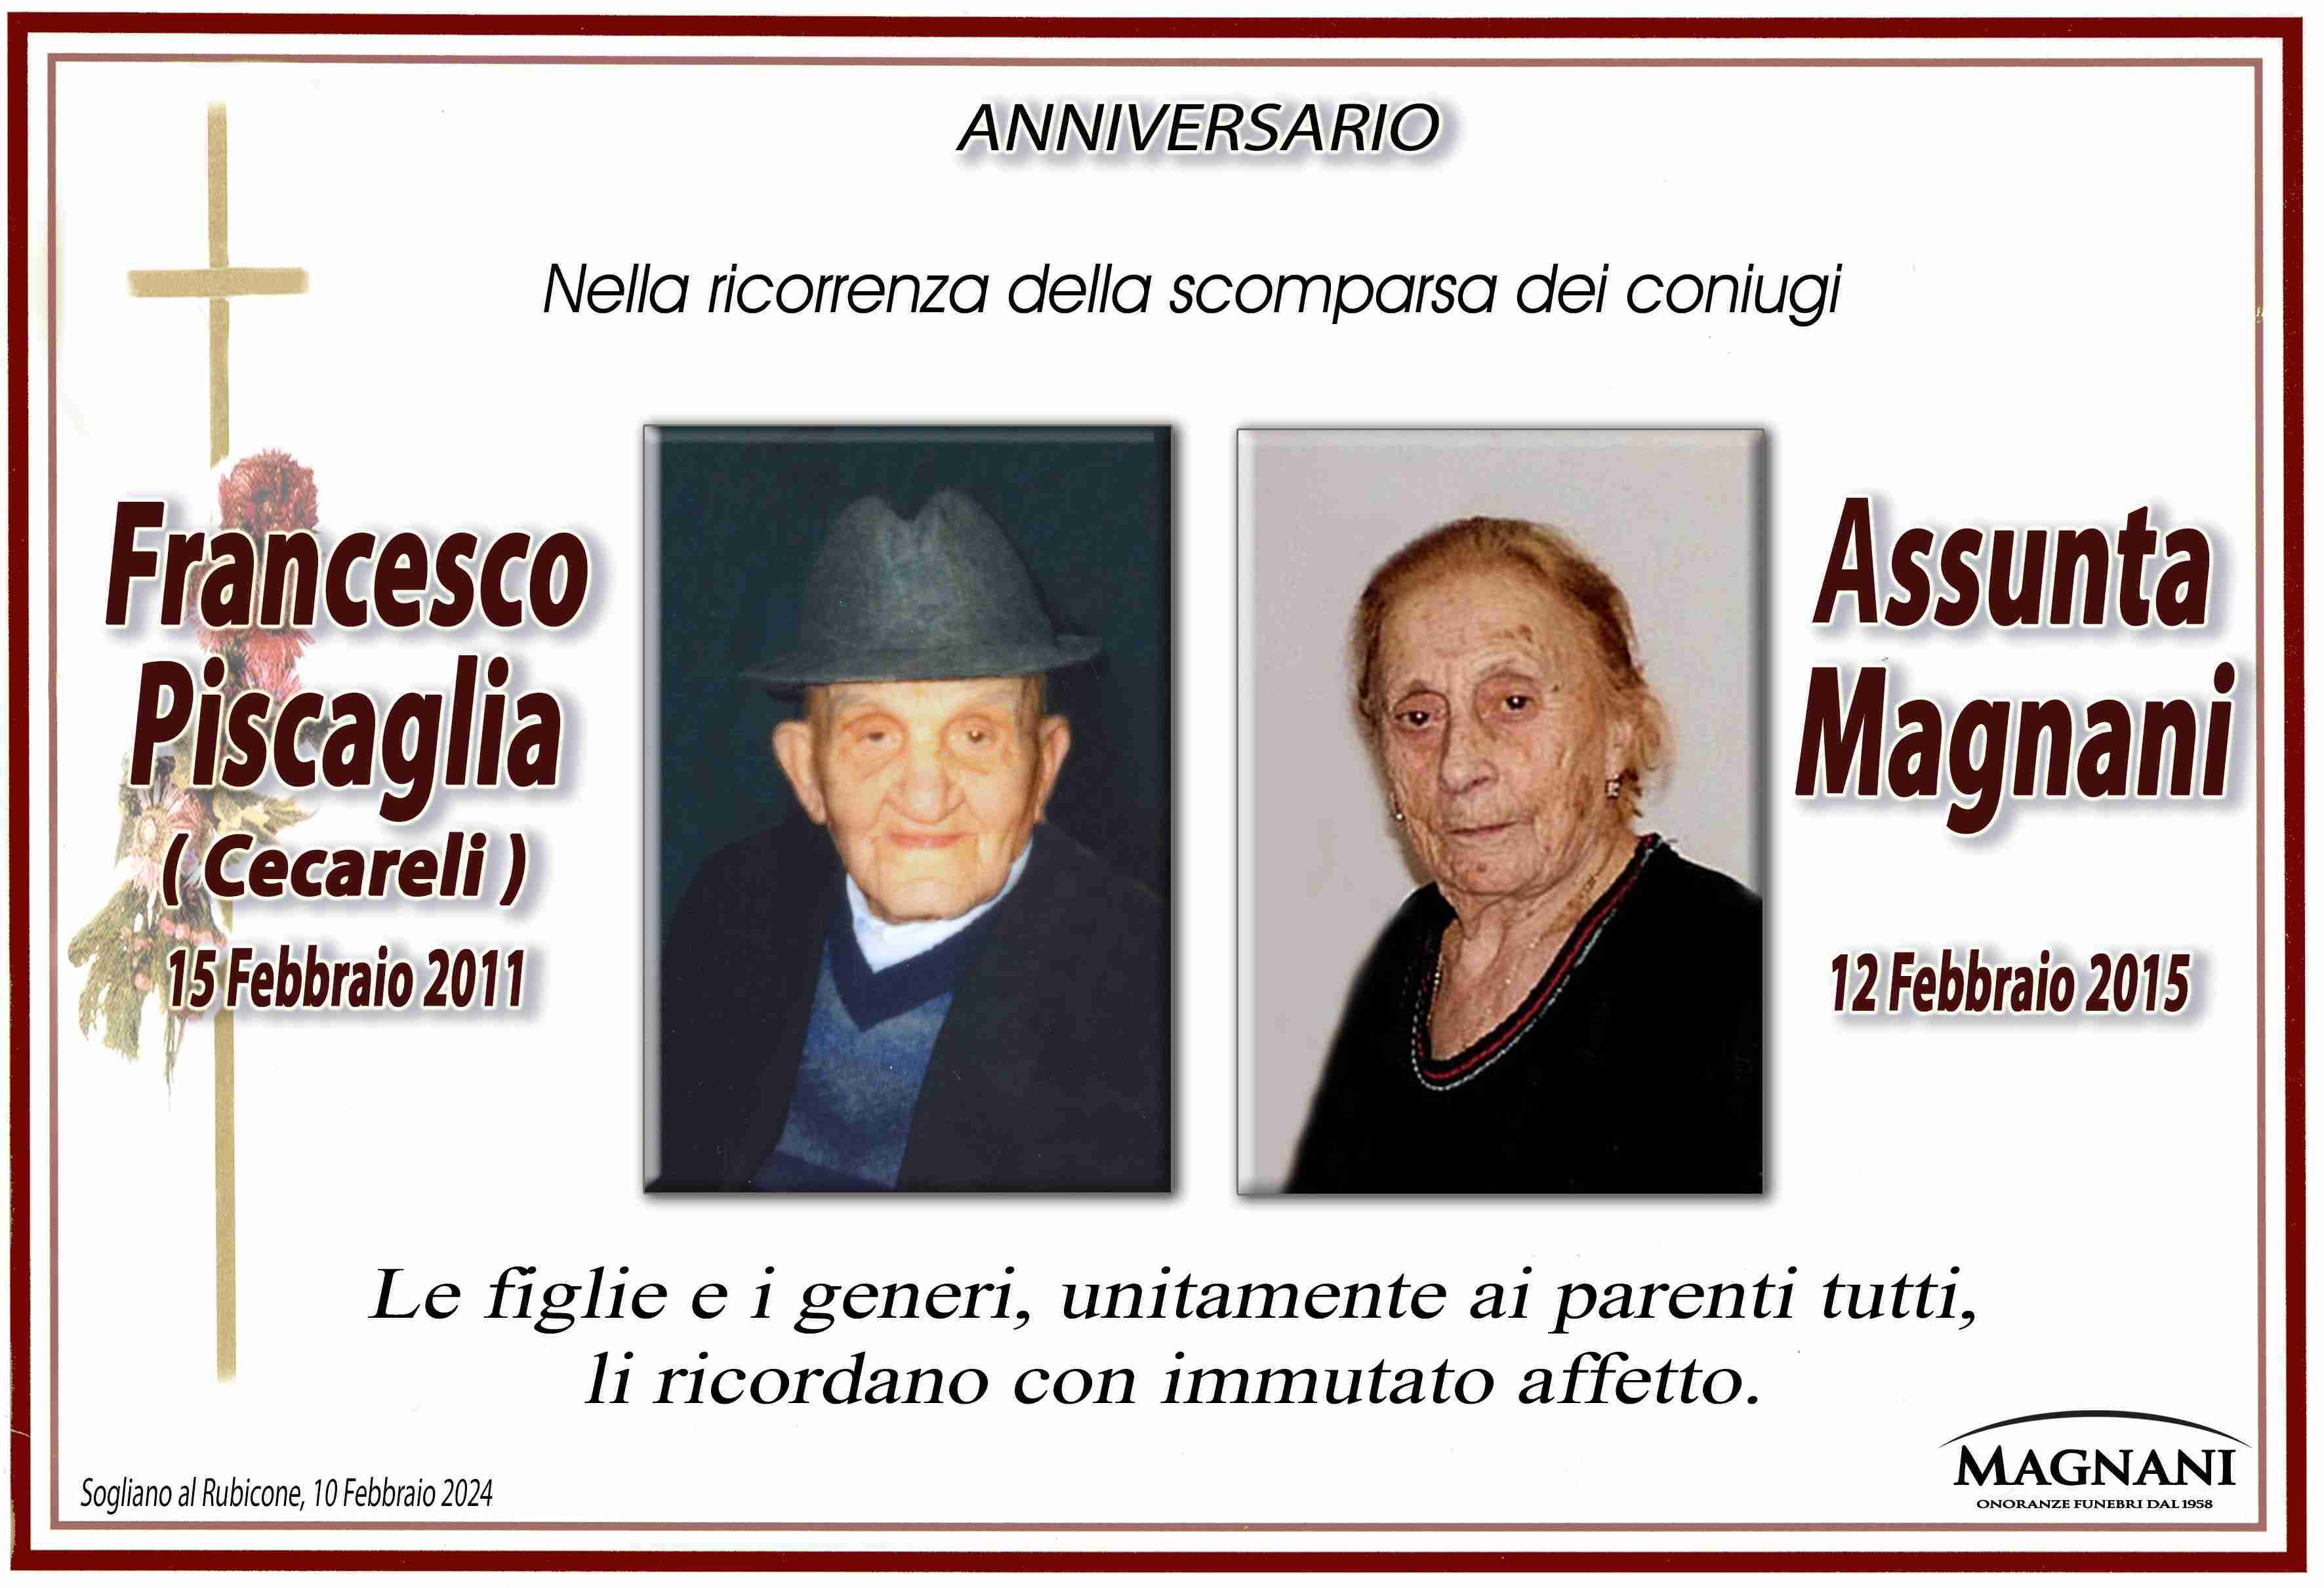 Francesco Piscaglia e Assunta Magnani